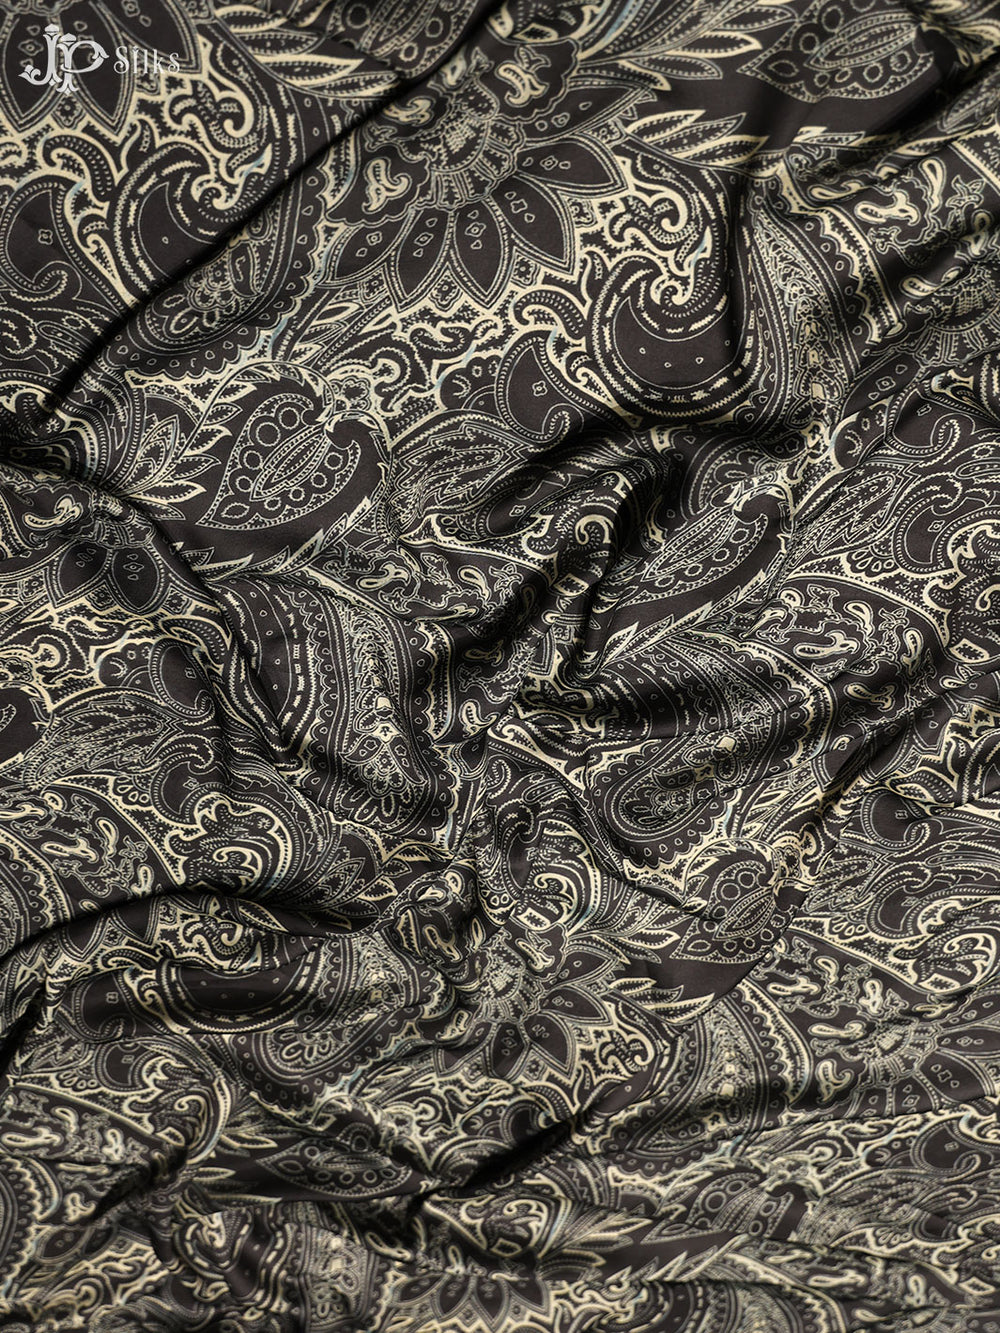 Black and White Digital Printed Crepe Fabric - E3304 - View 1